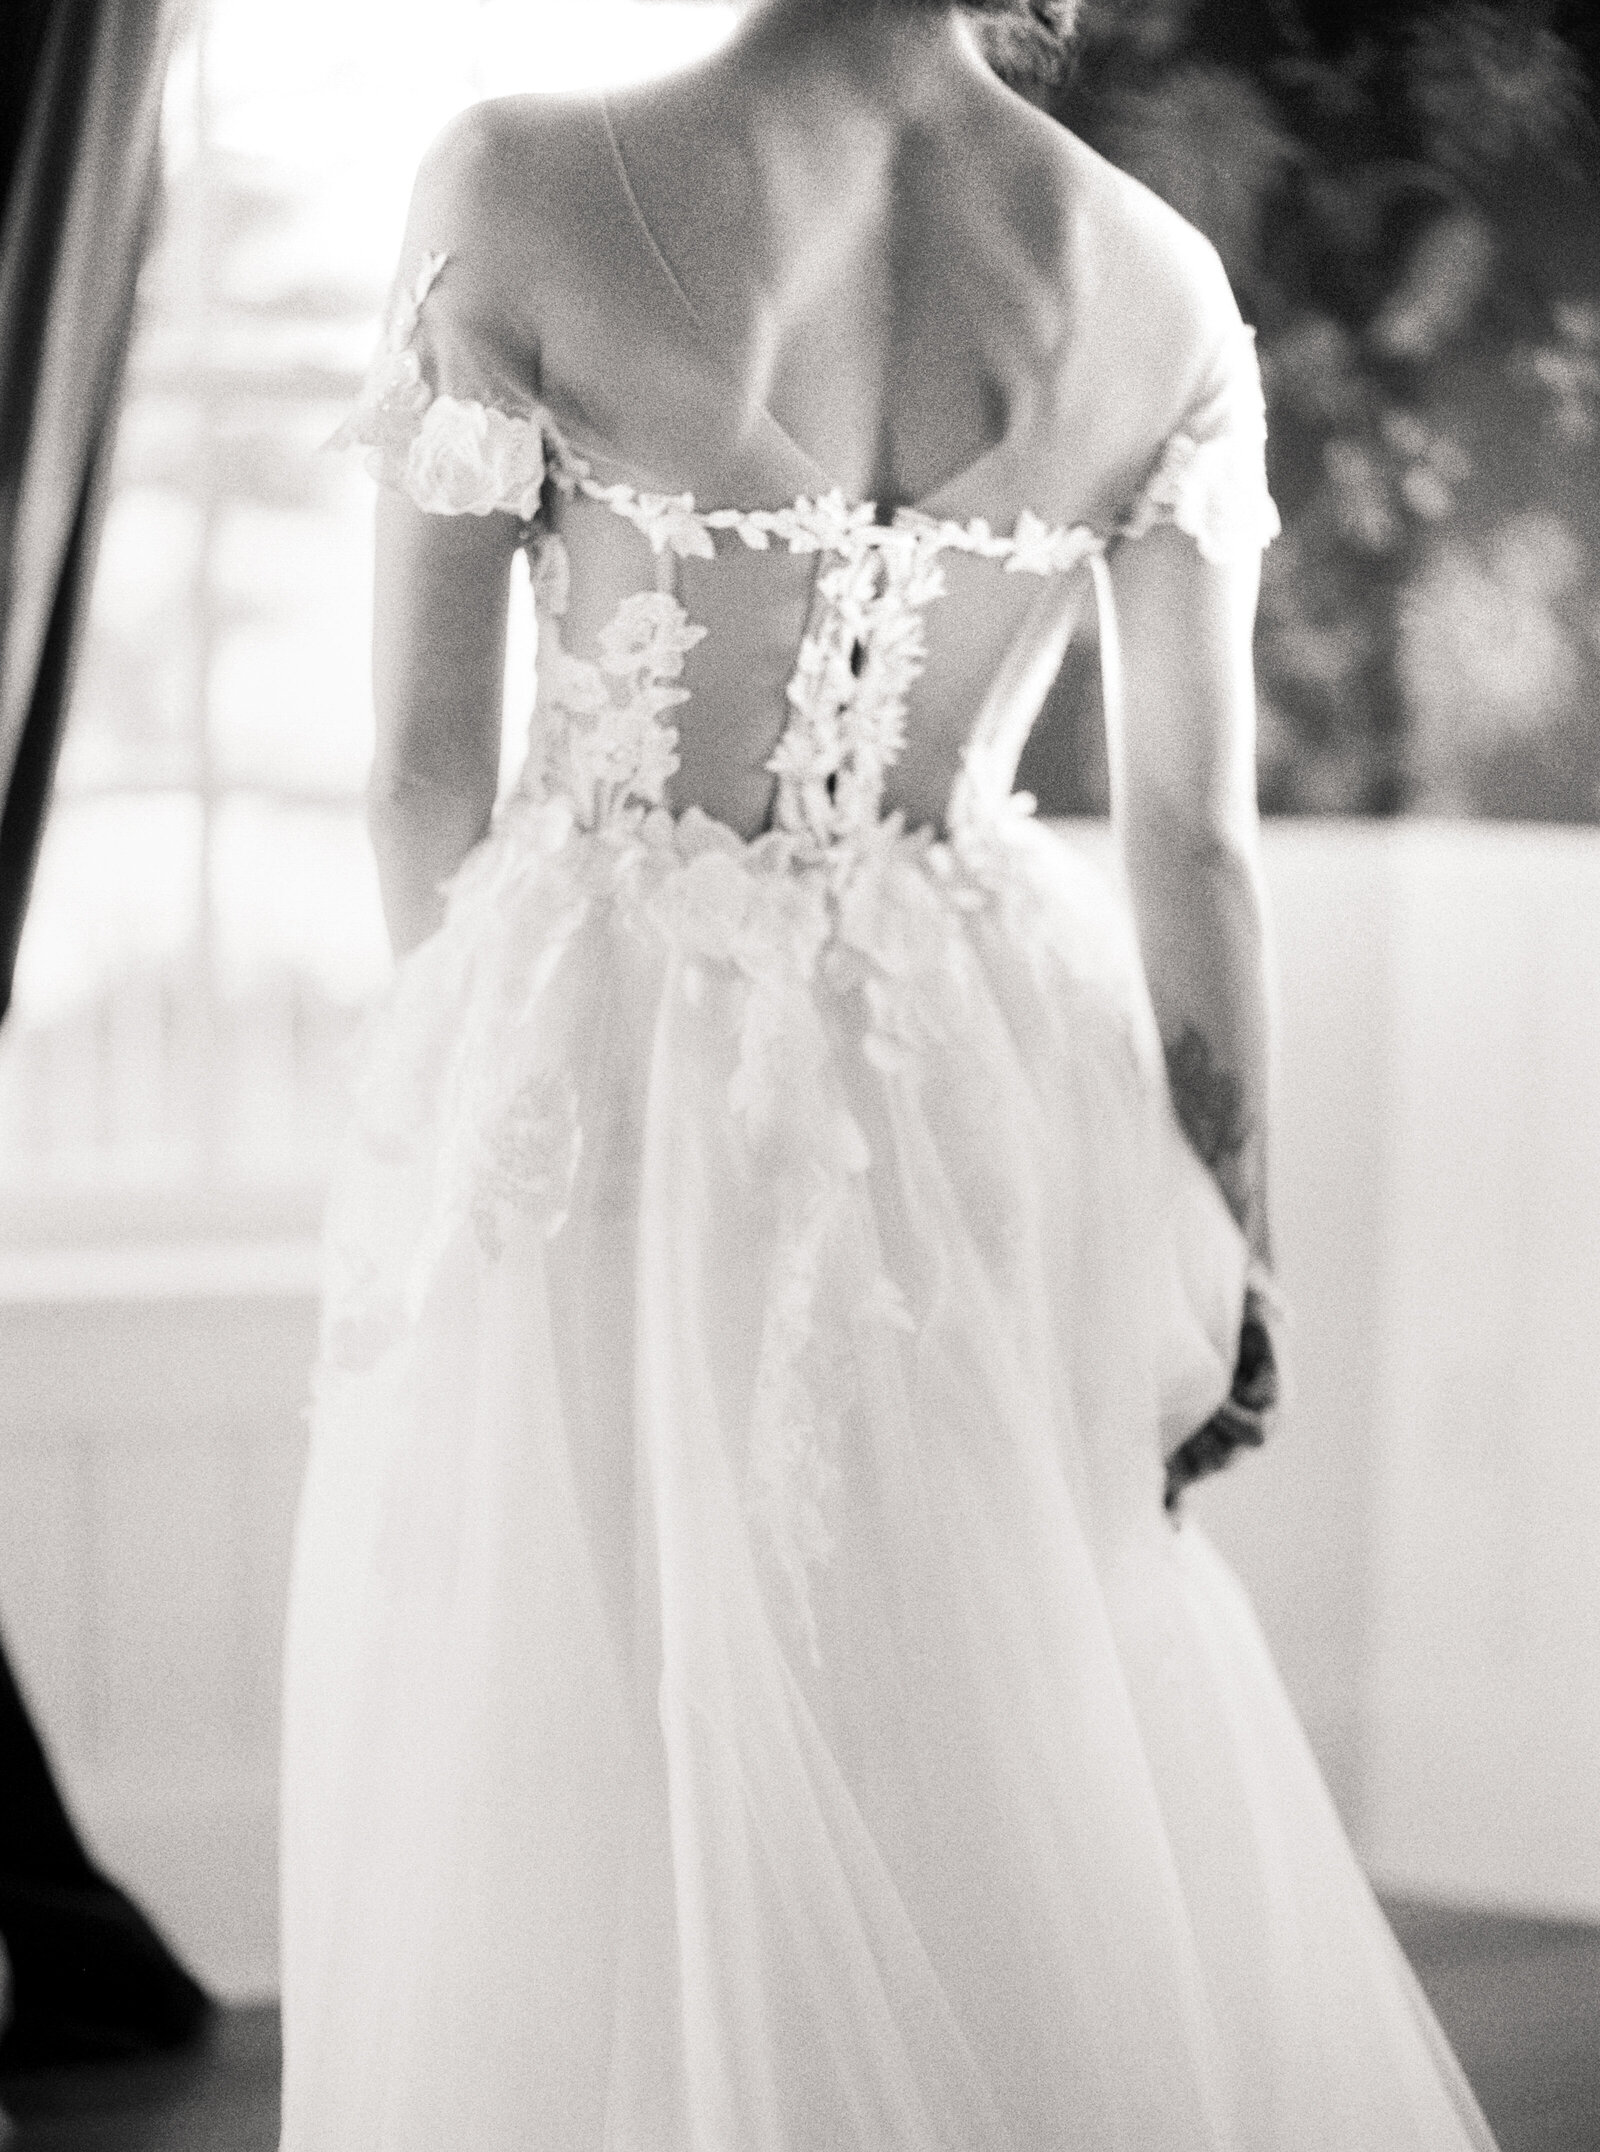 039-sean-cook-wedding-photography-black-white-bridal-portrait